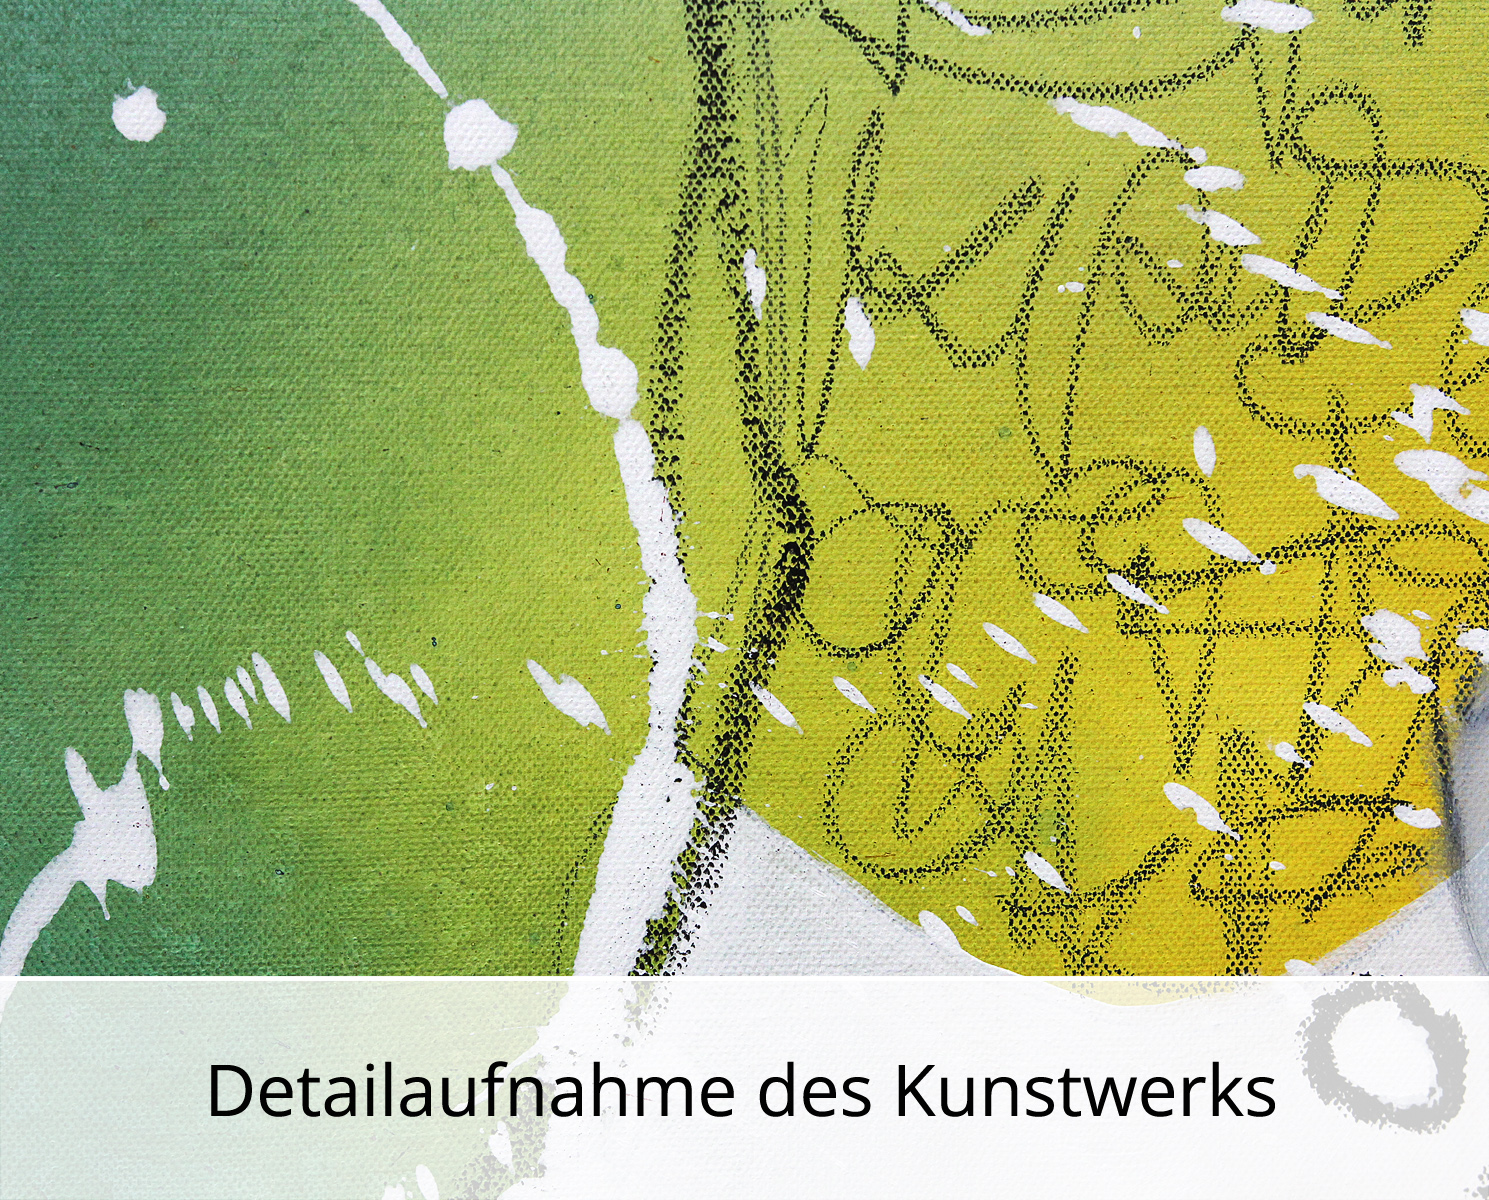 M.Kühne: "Schwerelos", modernes Originalgemälde (Unikat)